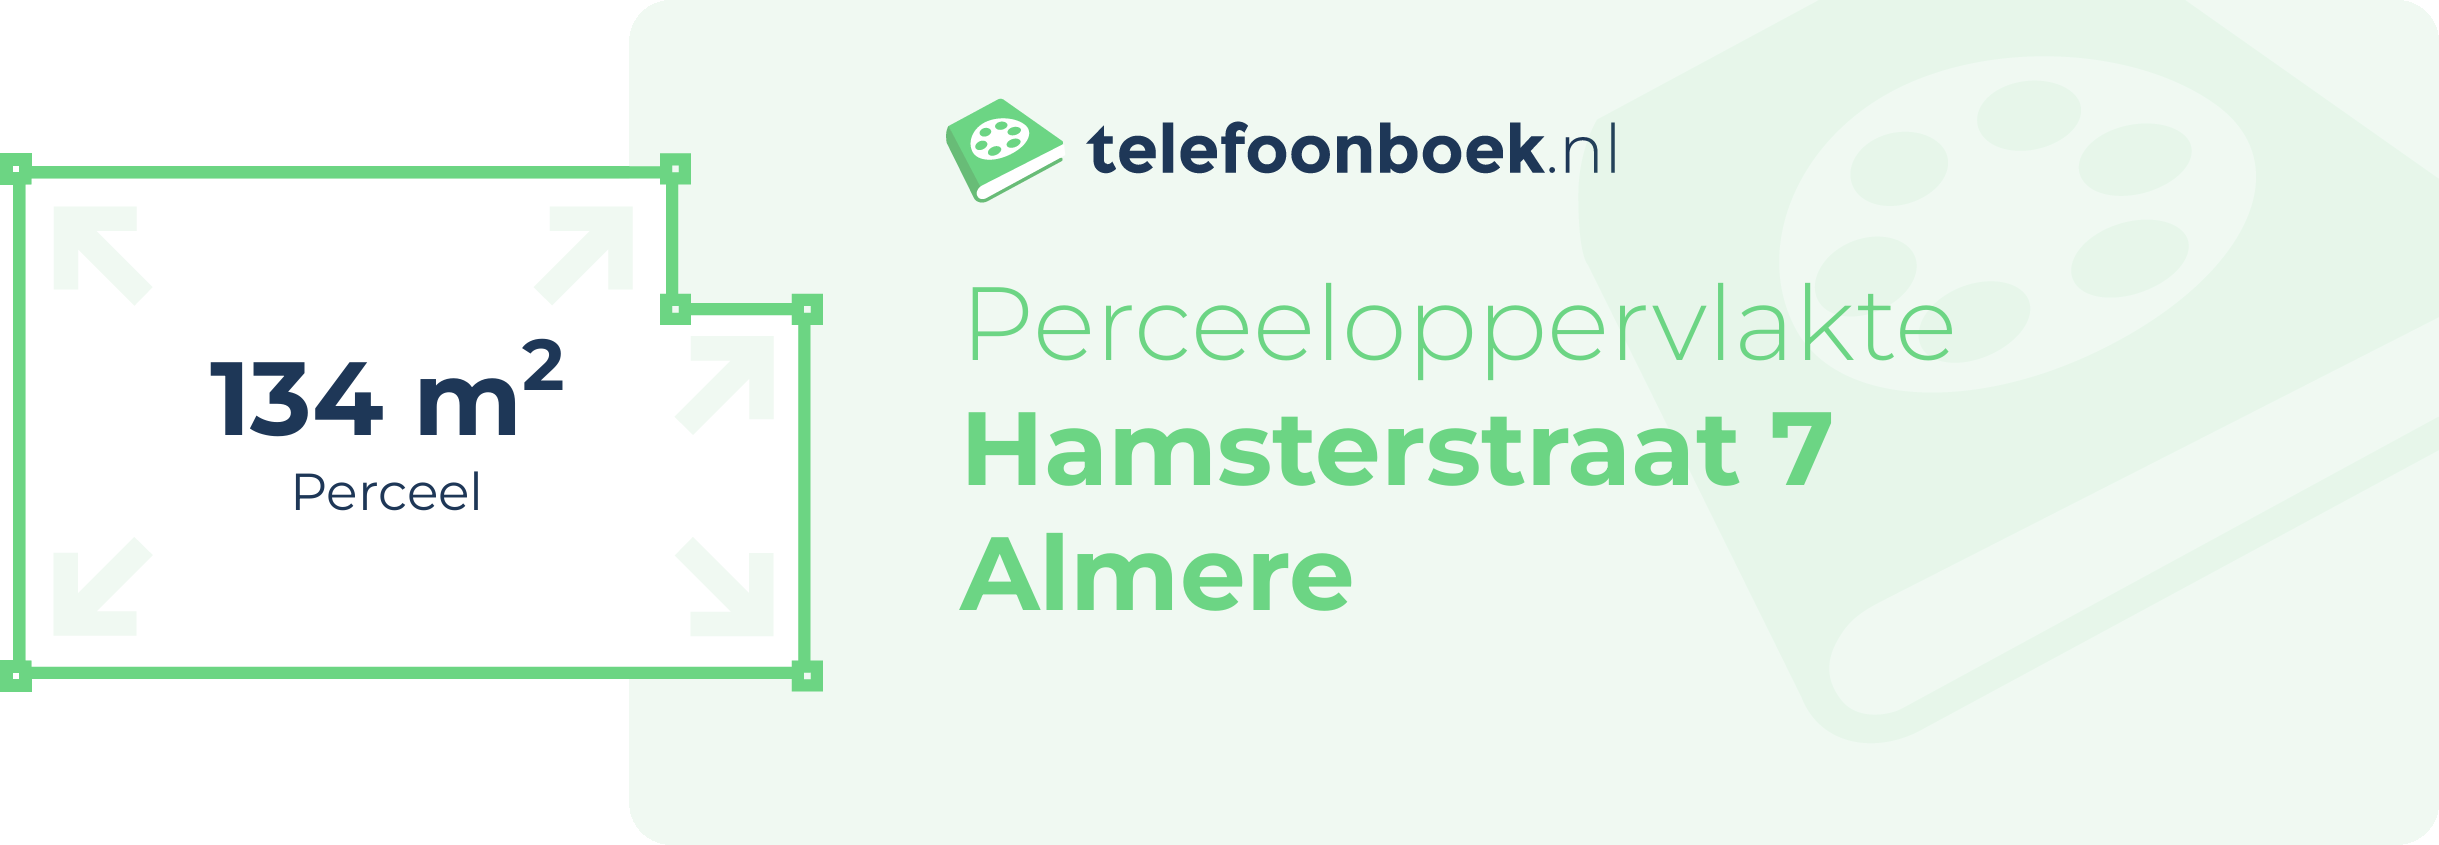 Perceeloppervlakte Hamsterstraat 7 Almere